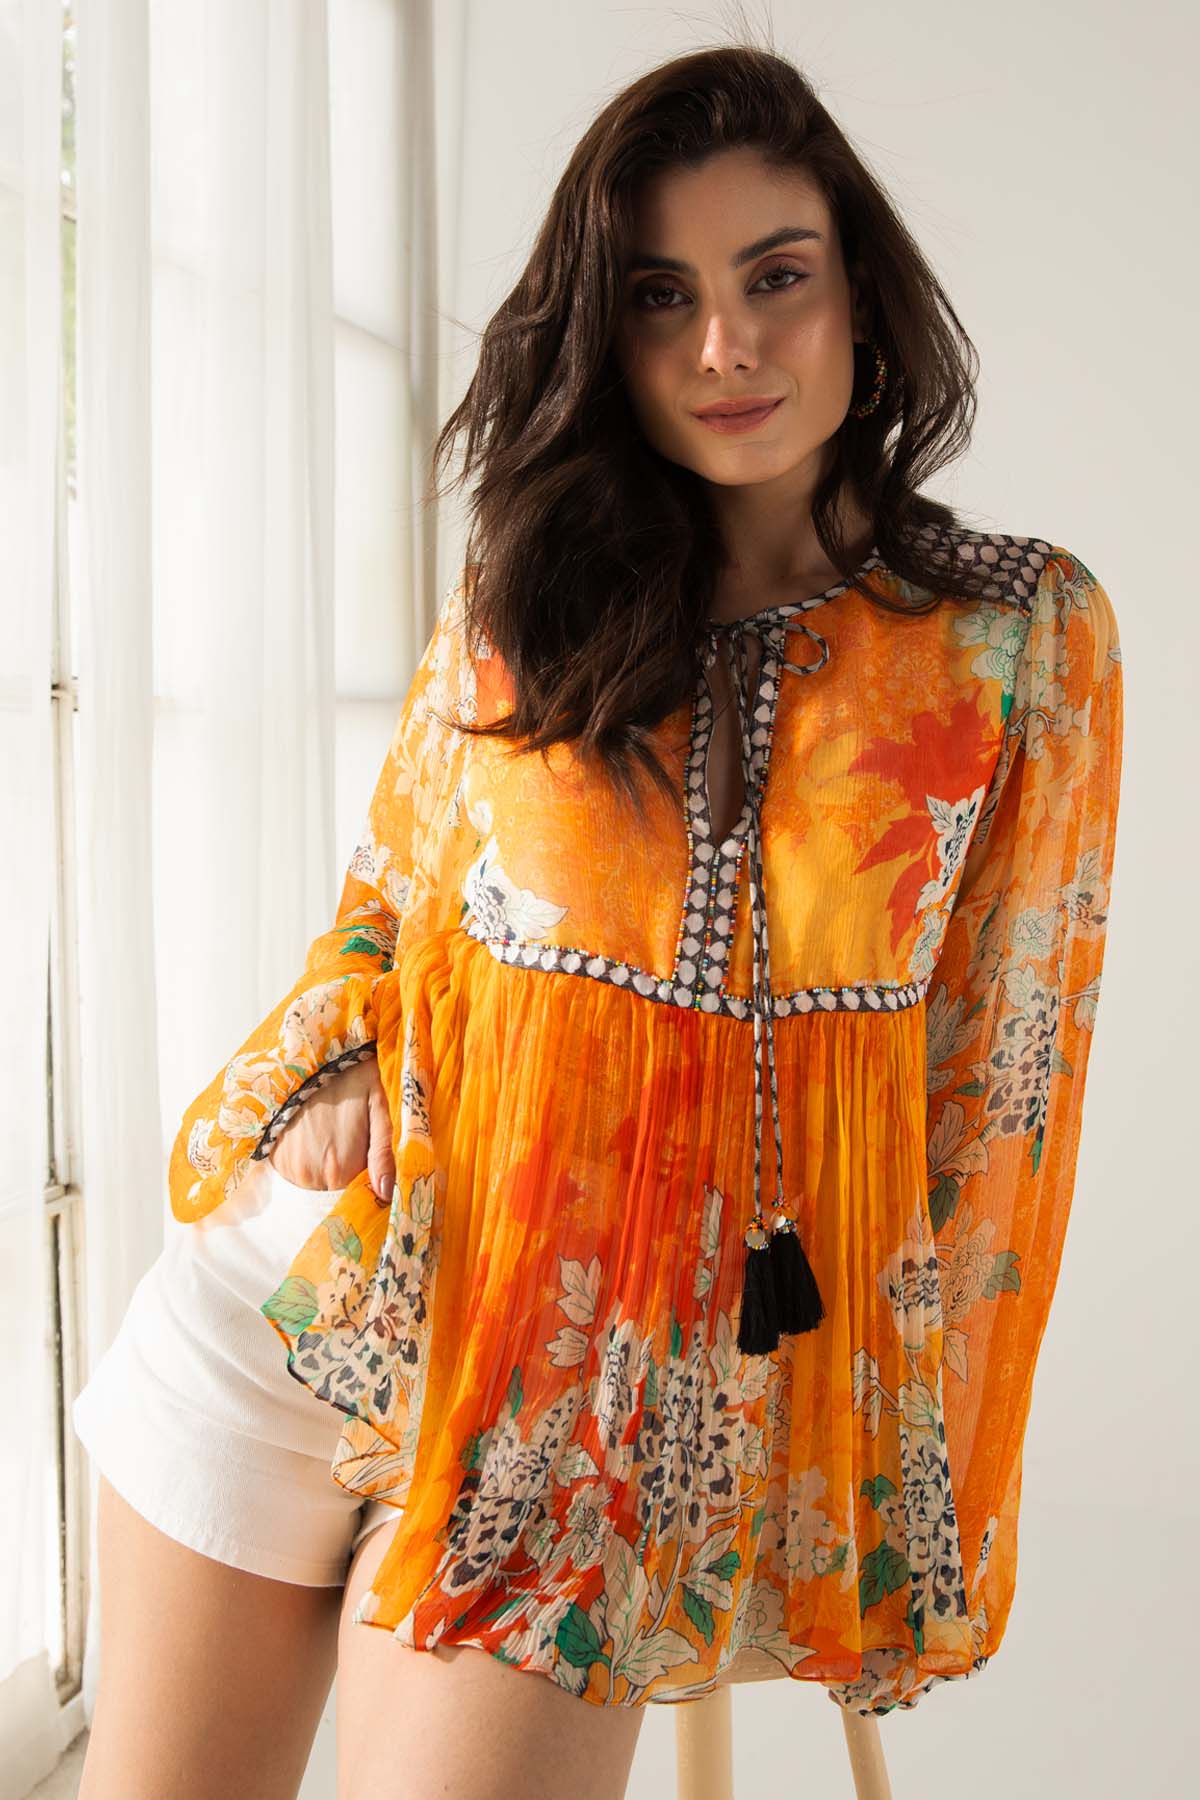 Reena Sharma Floral Chiffon Orange Boho Top For Women Online at ScrollnShops